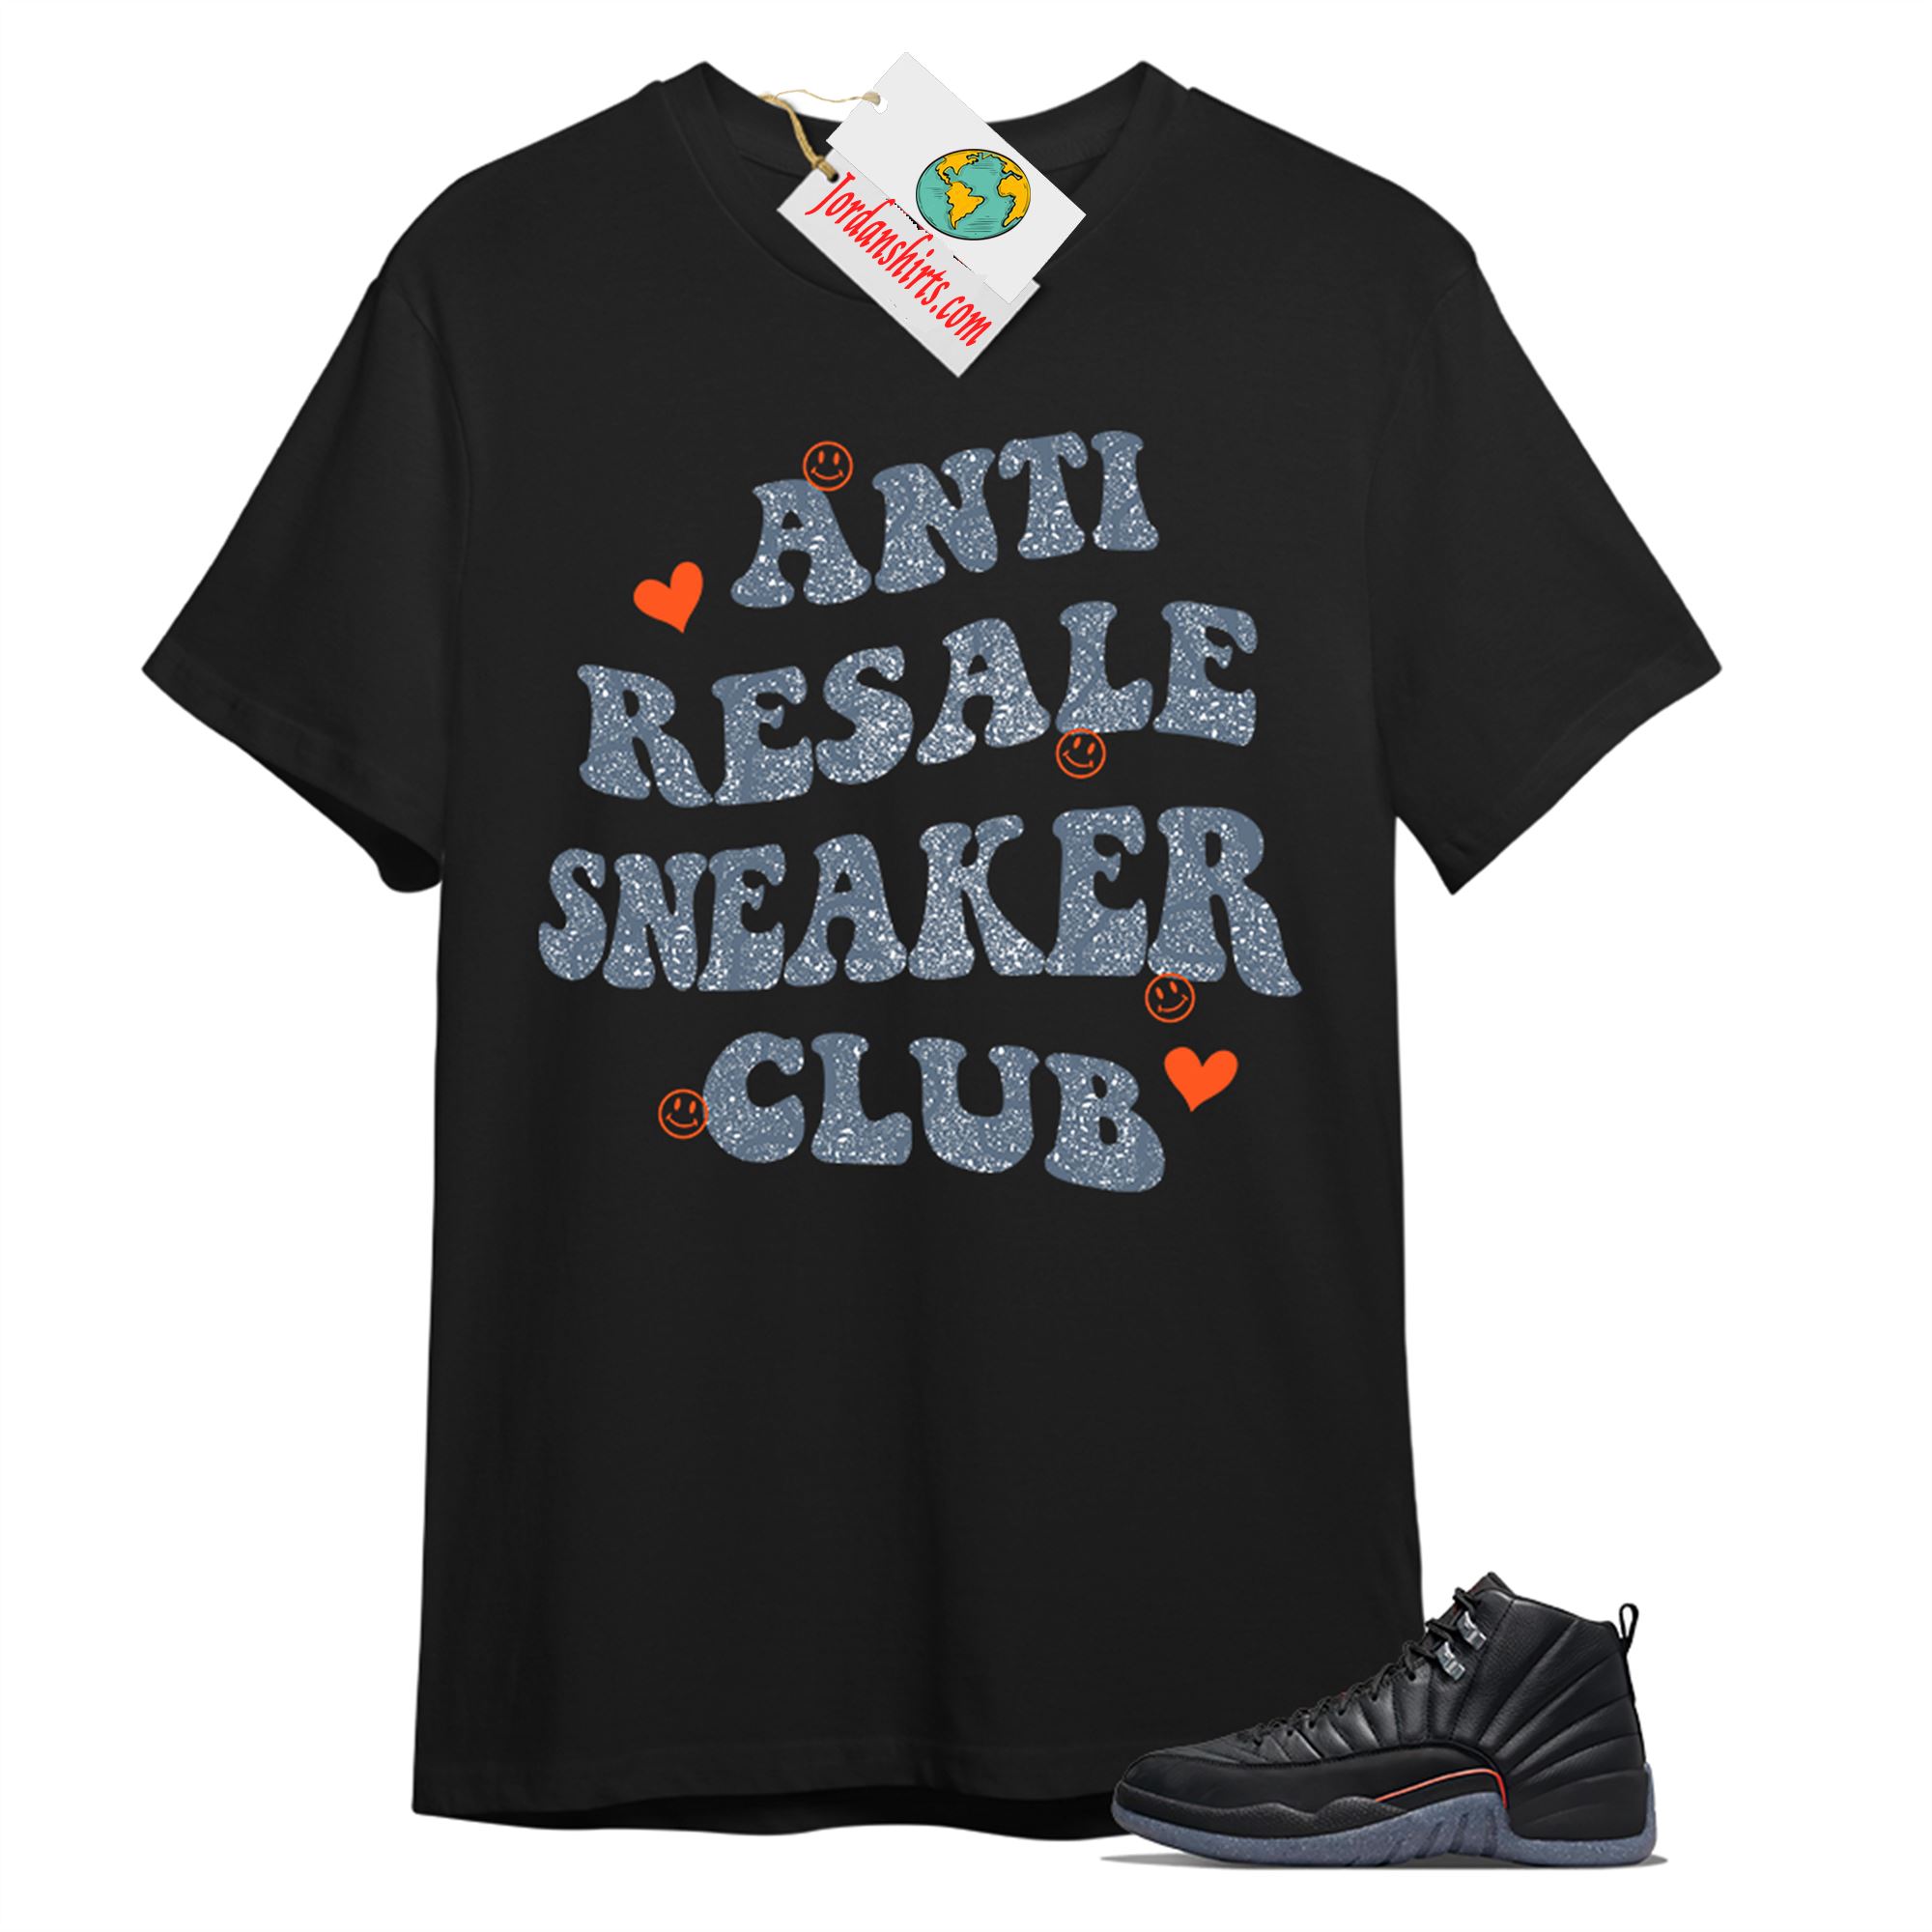 Jordan 12 Shirt, Anti Resale Sneaker Club Black T-shirt Air Jordan 12 Utility Grind 12s Size Up To 5xl